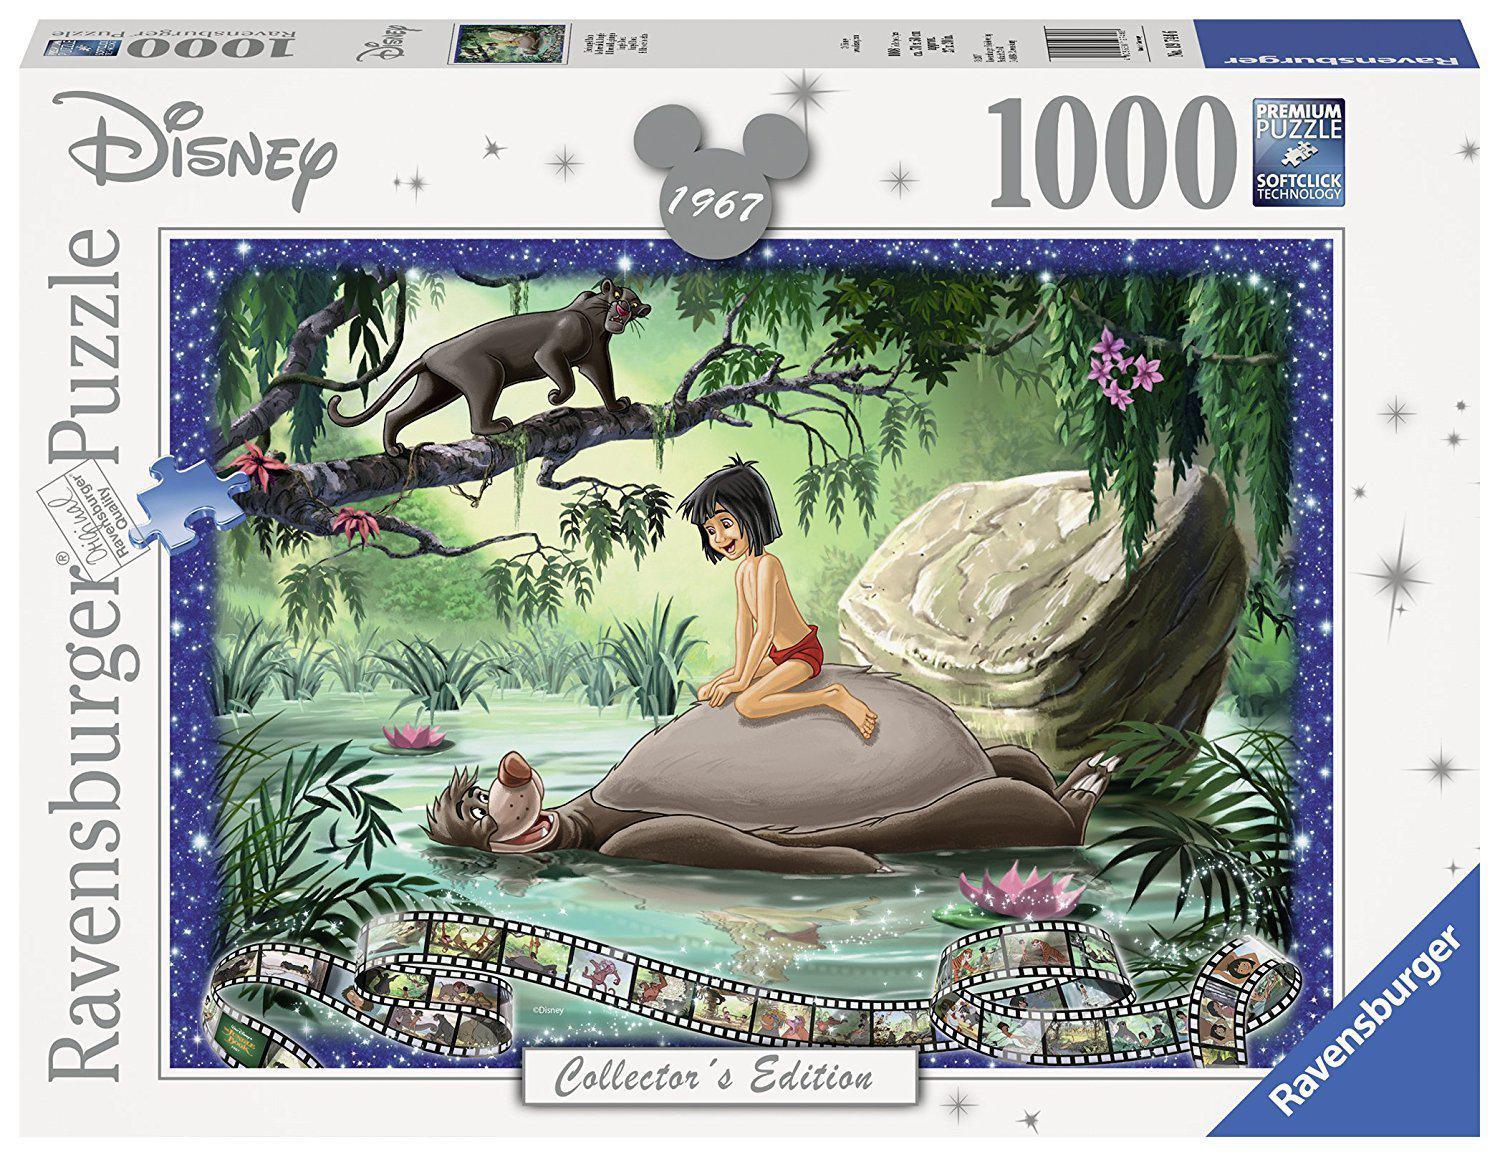 Ravensburger Puzzle 1000pc - Disney Memories The Jungle Book 1967